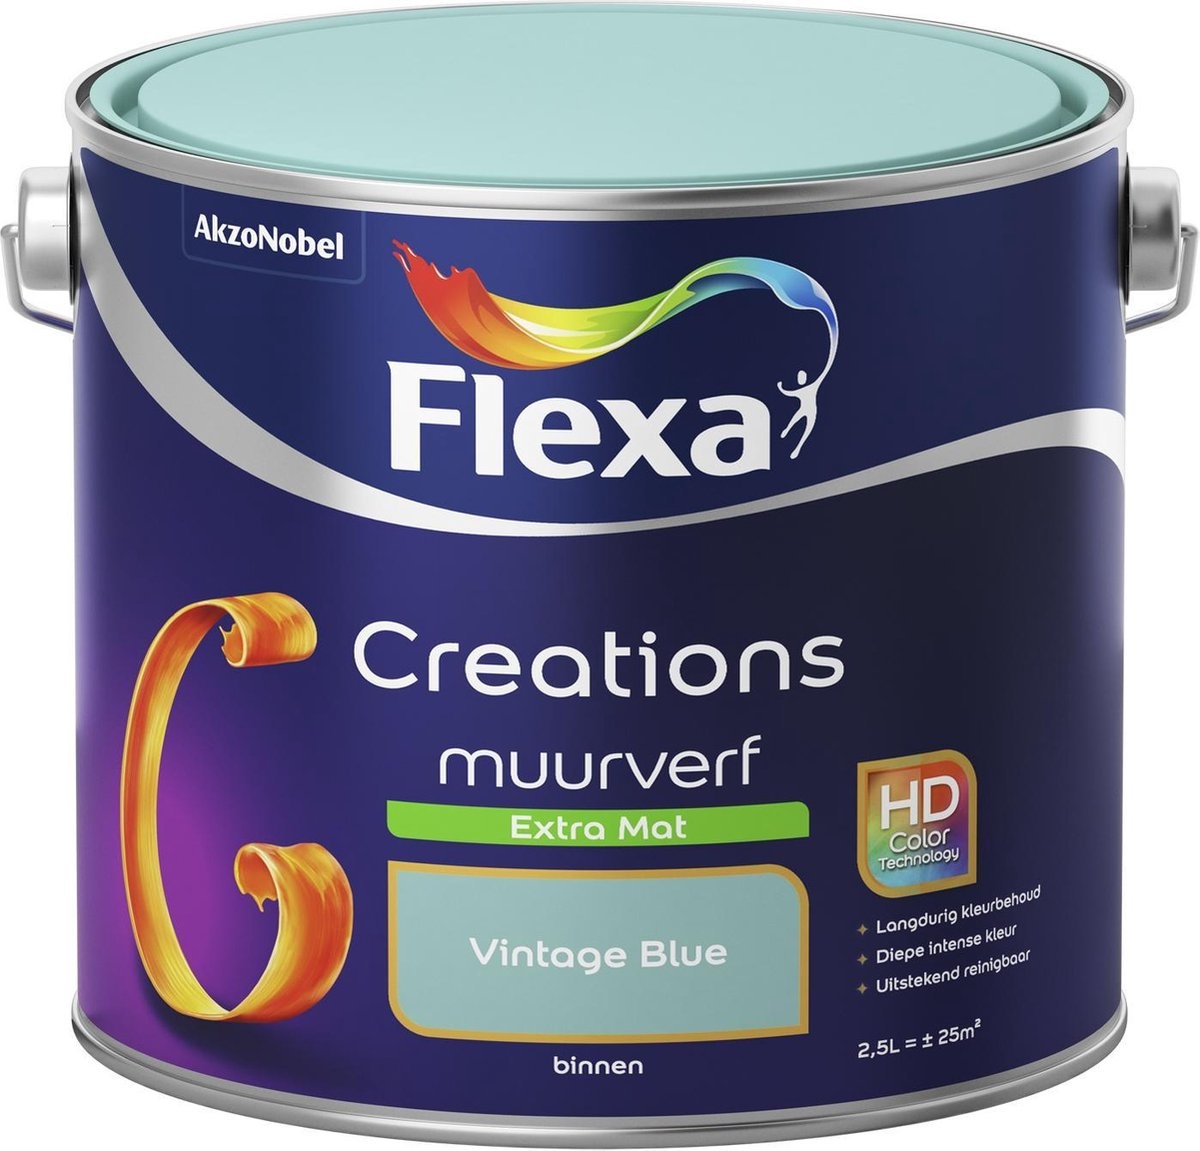 Flexa Muurverf Extra Mat - Vintage Blue - 2,5 liter kopen? - De Verfzaak